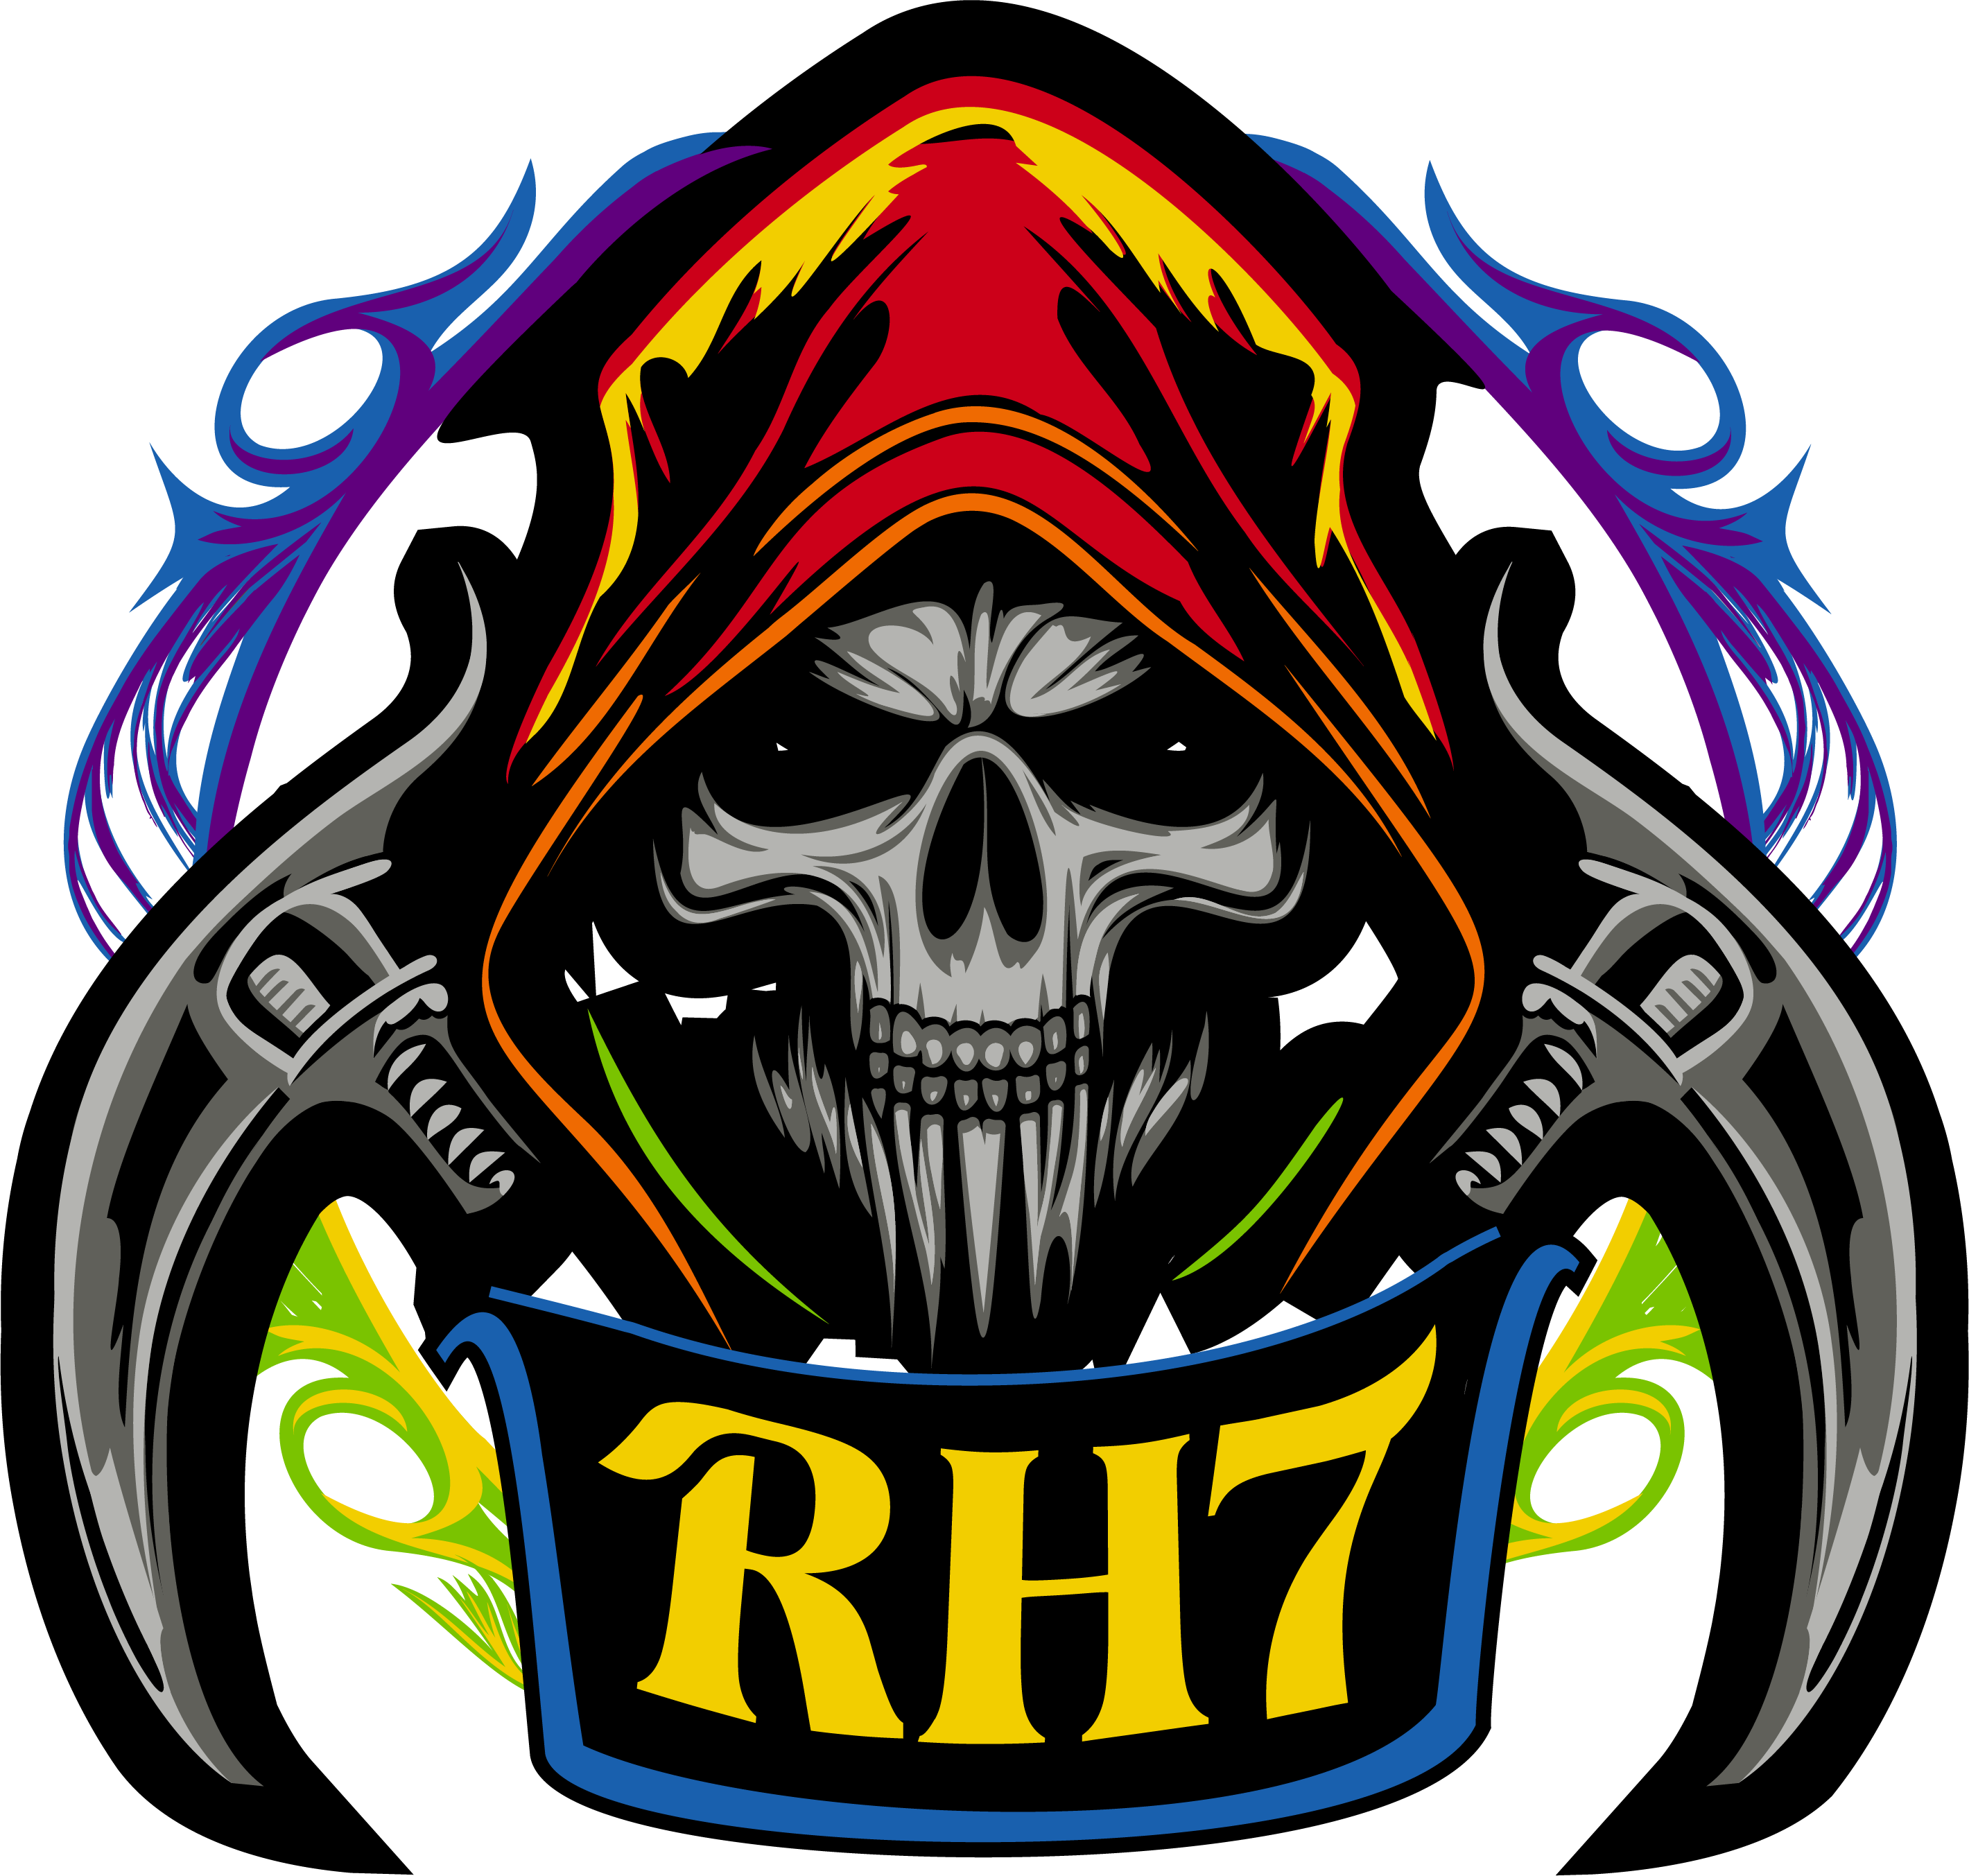 RH7-ColorVariationsArtboard 30@8x